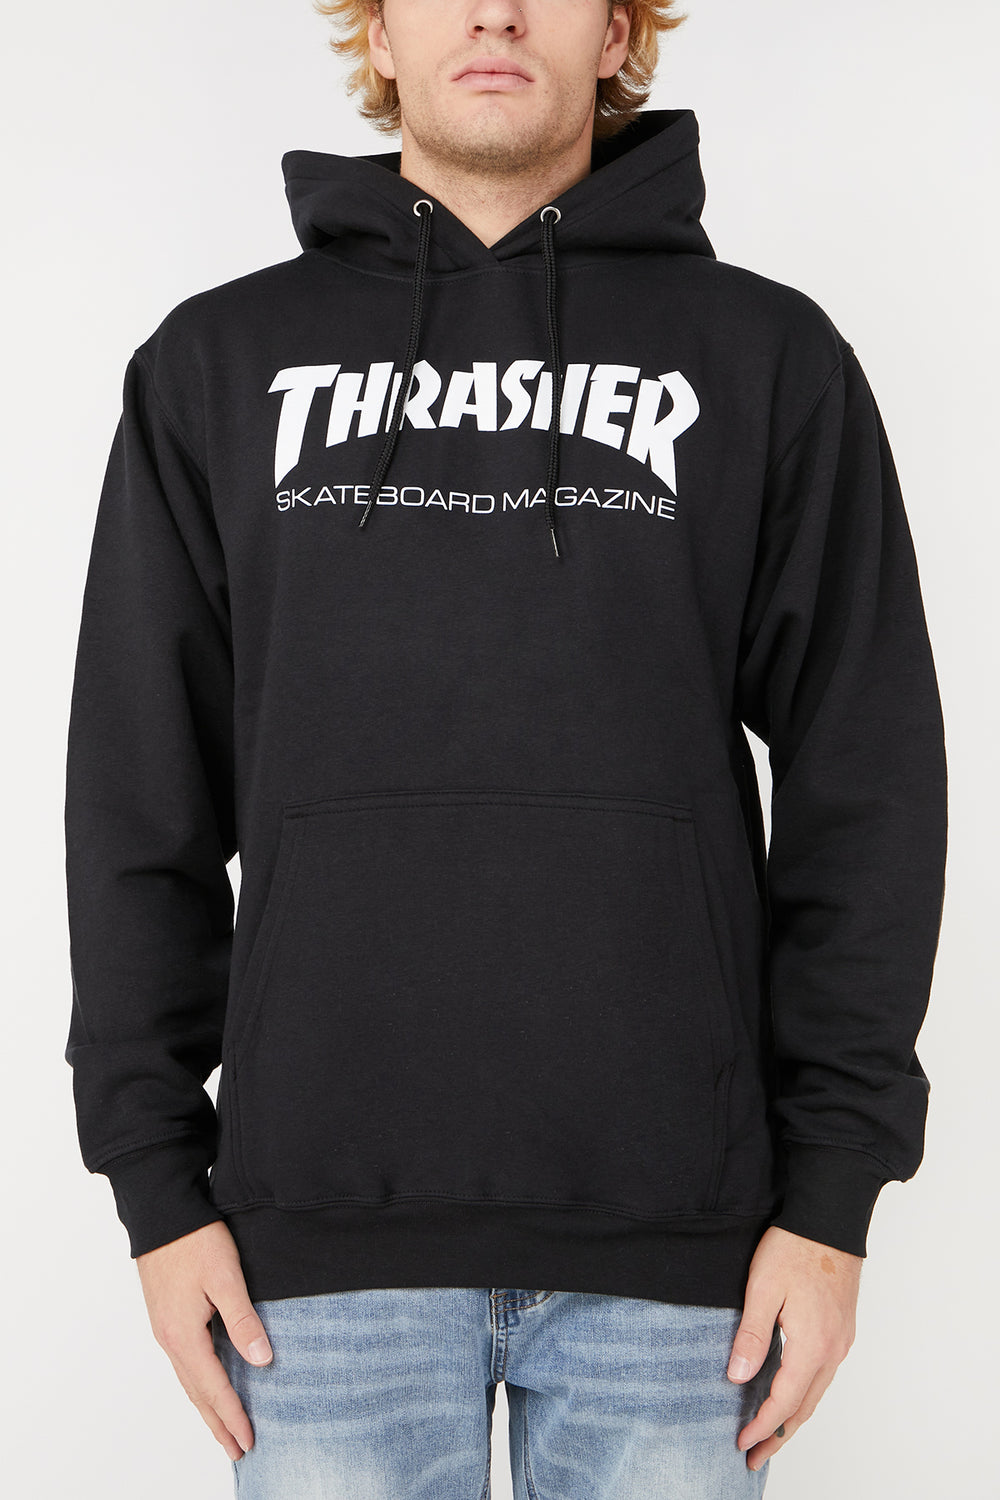 Thrasher Skateboard Magazine Black Hoodie Black